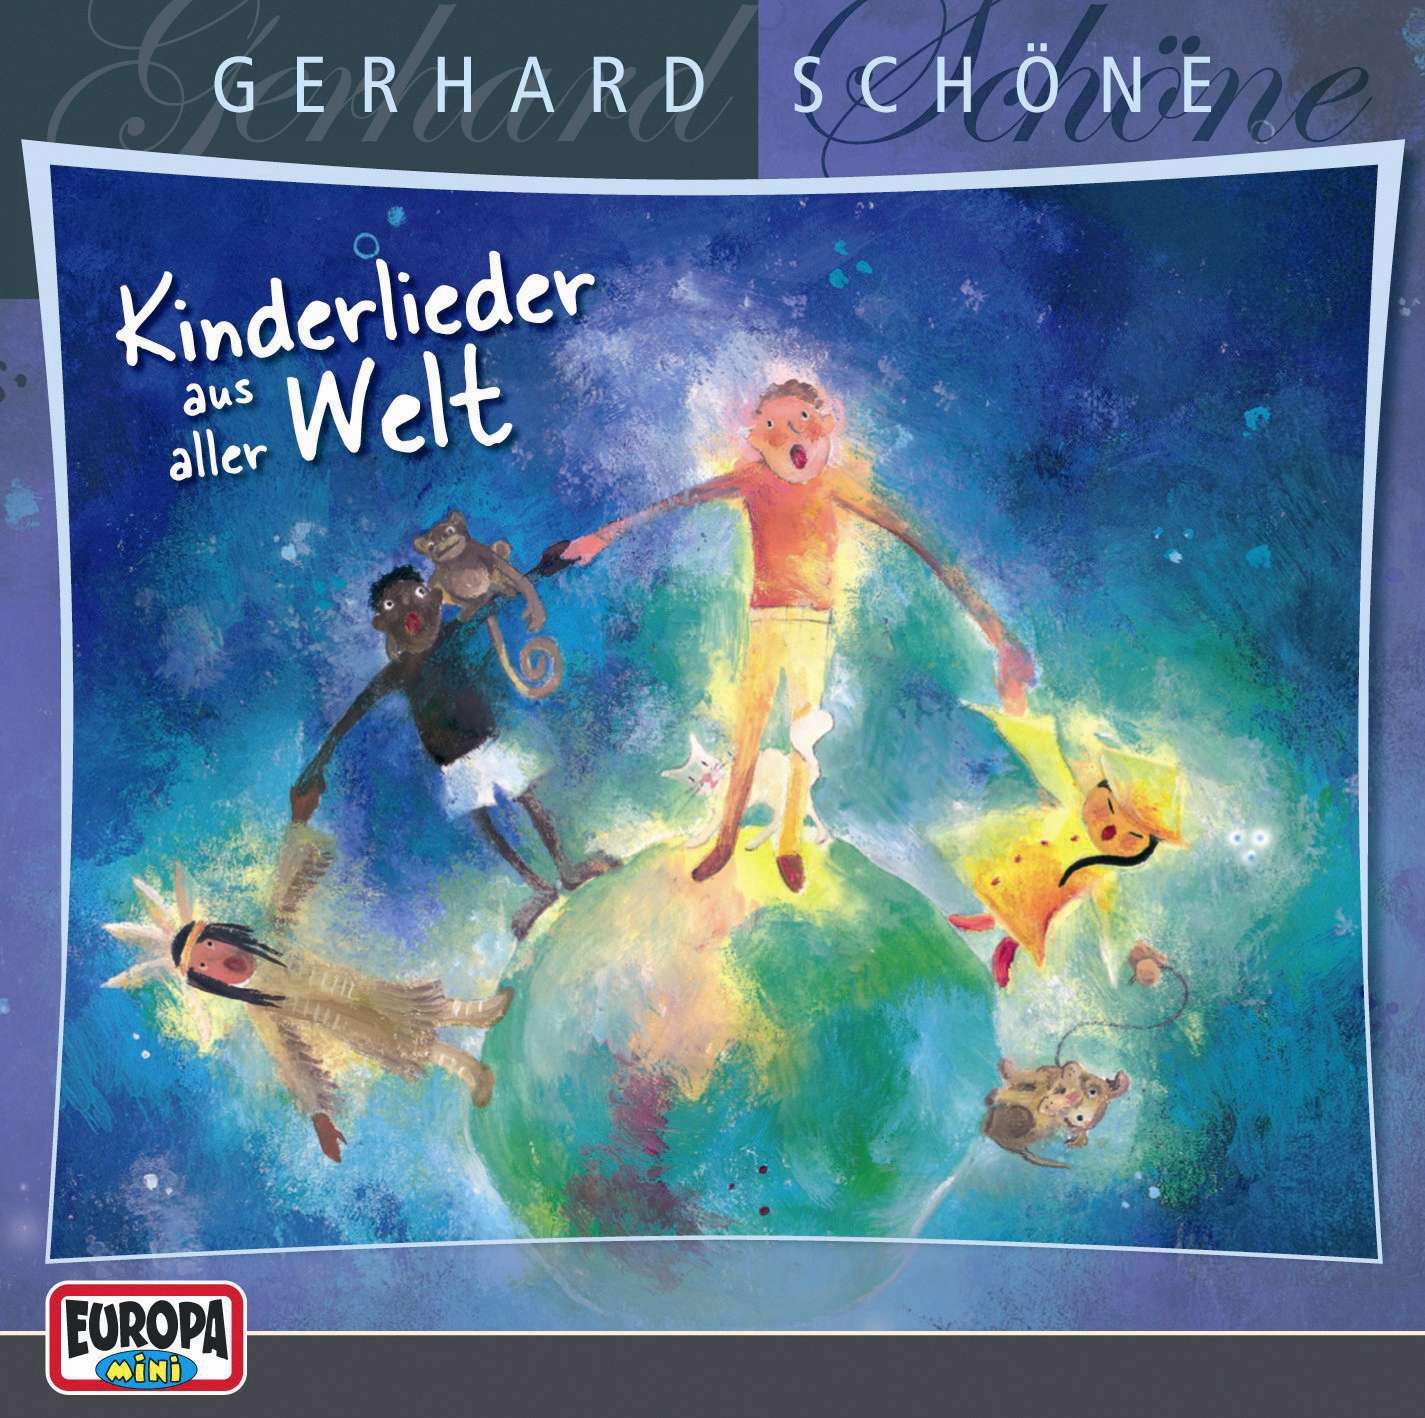 Gerhard_Schoene_Kindermusik_Beratung